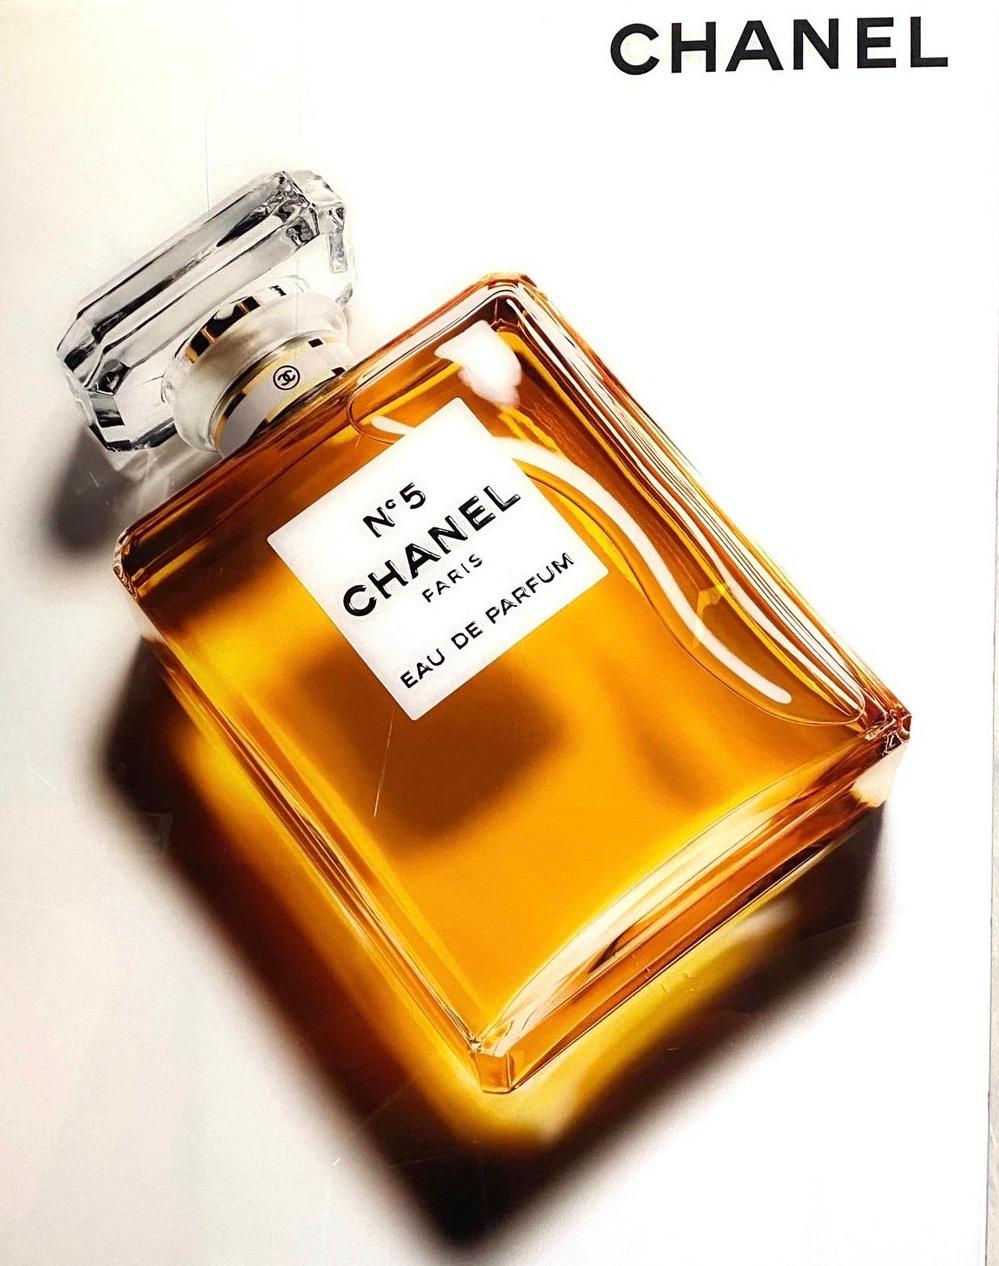 Chanel Original Advertising Perfume Store Display in Plexiglass 1